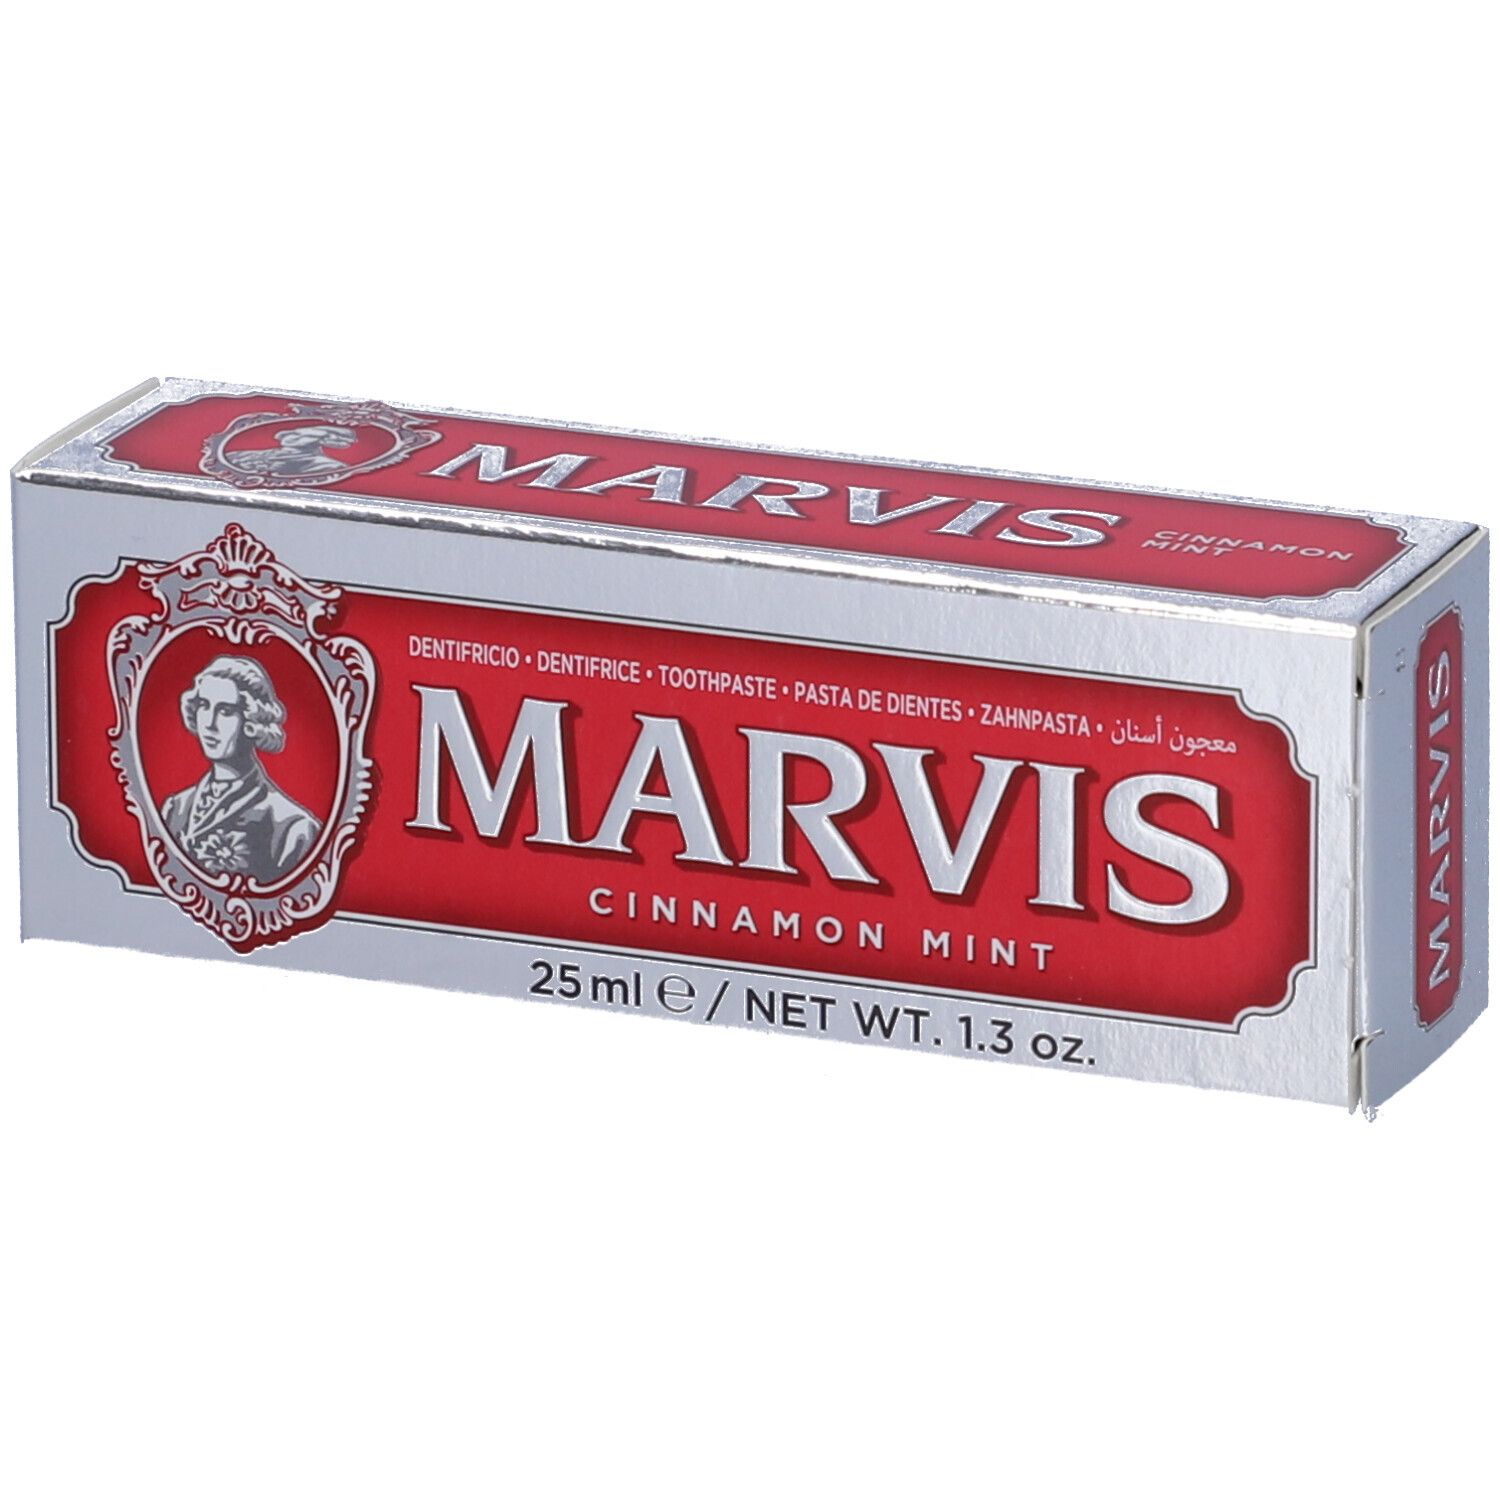 Marvis Cinnamon Mint Dentifricio